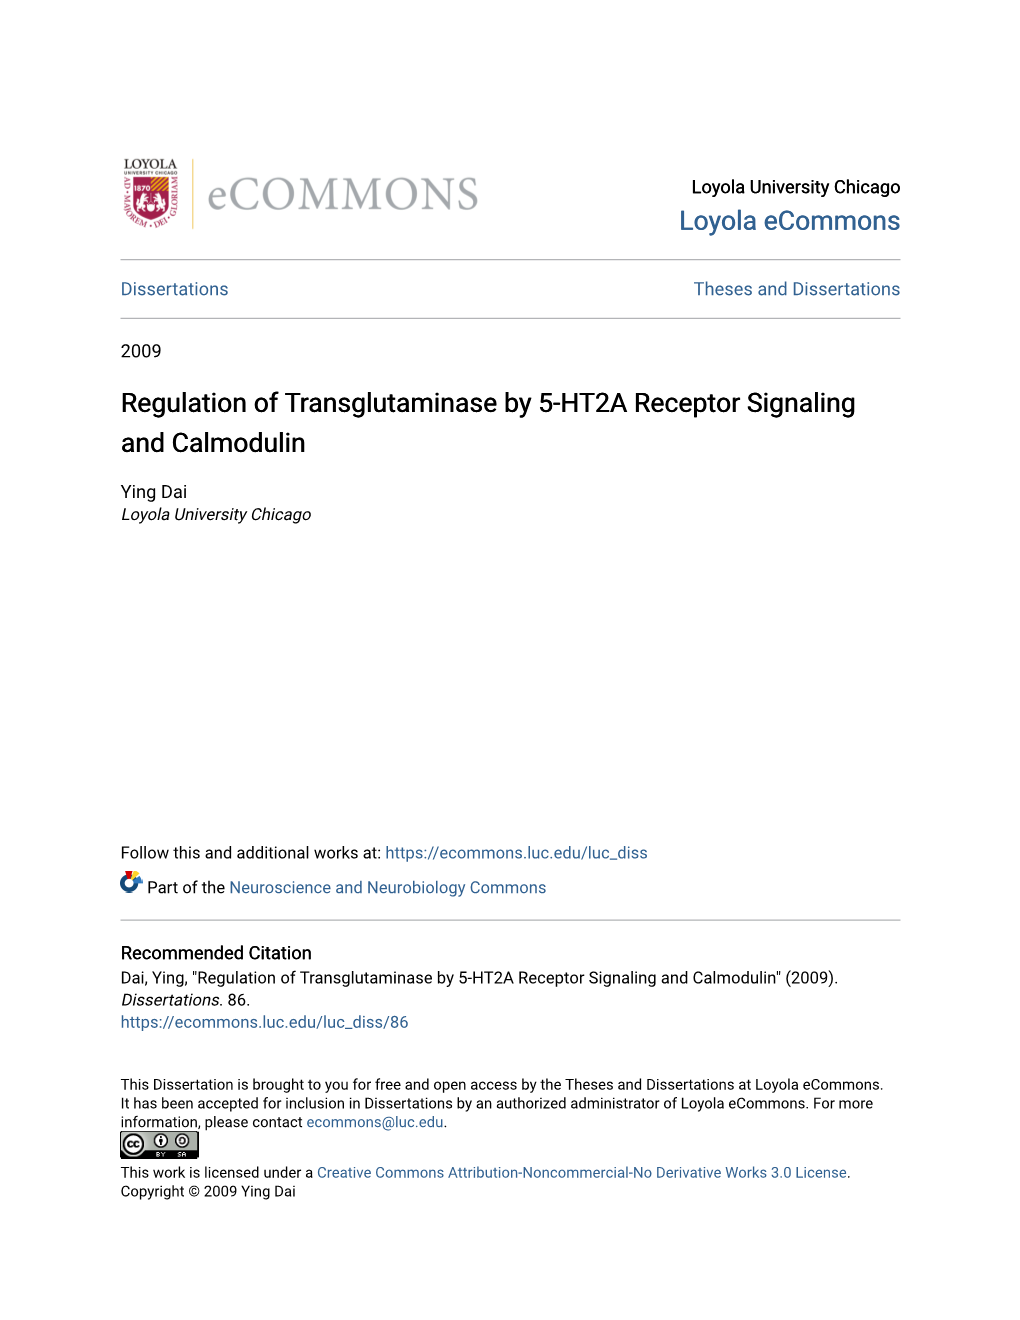 Regulation of Transglutaminase by 5-HT2A Receptor Signaling and Calmodulin